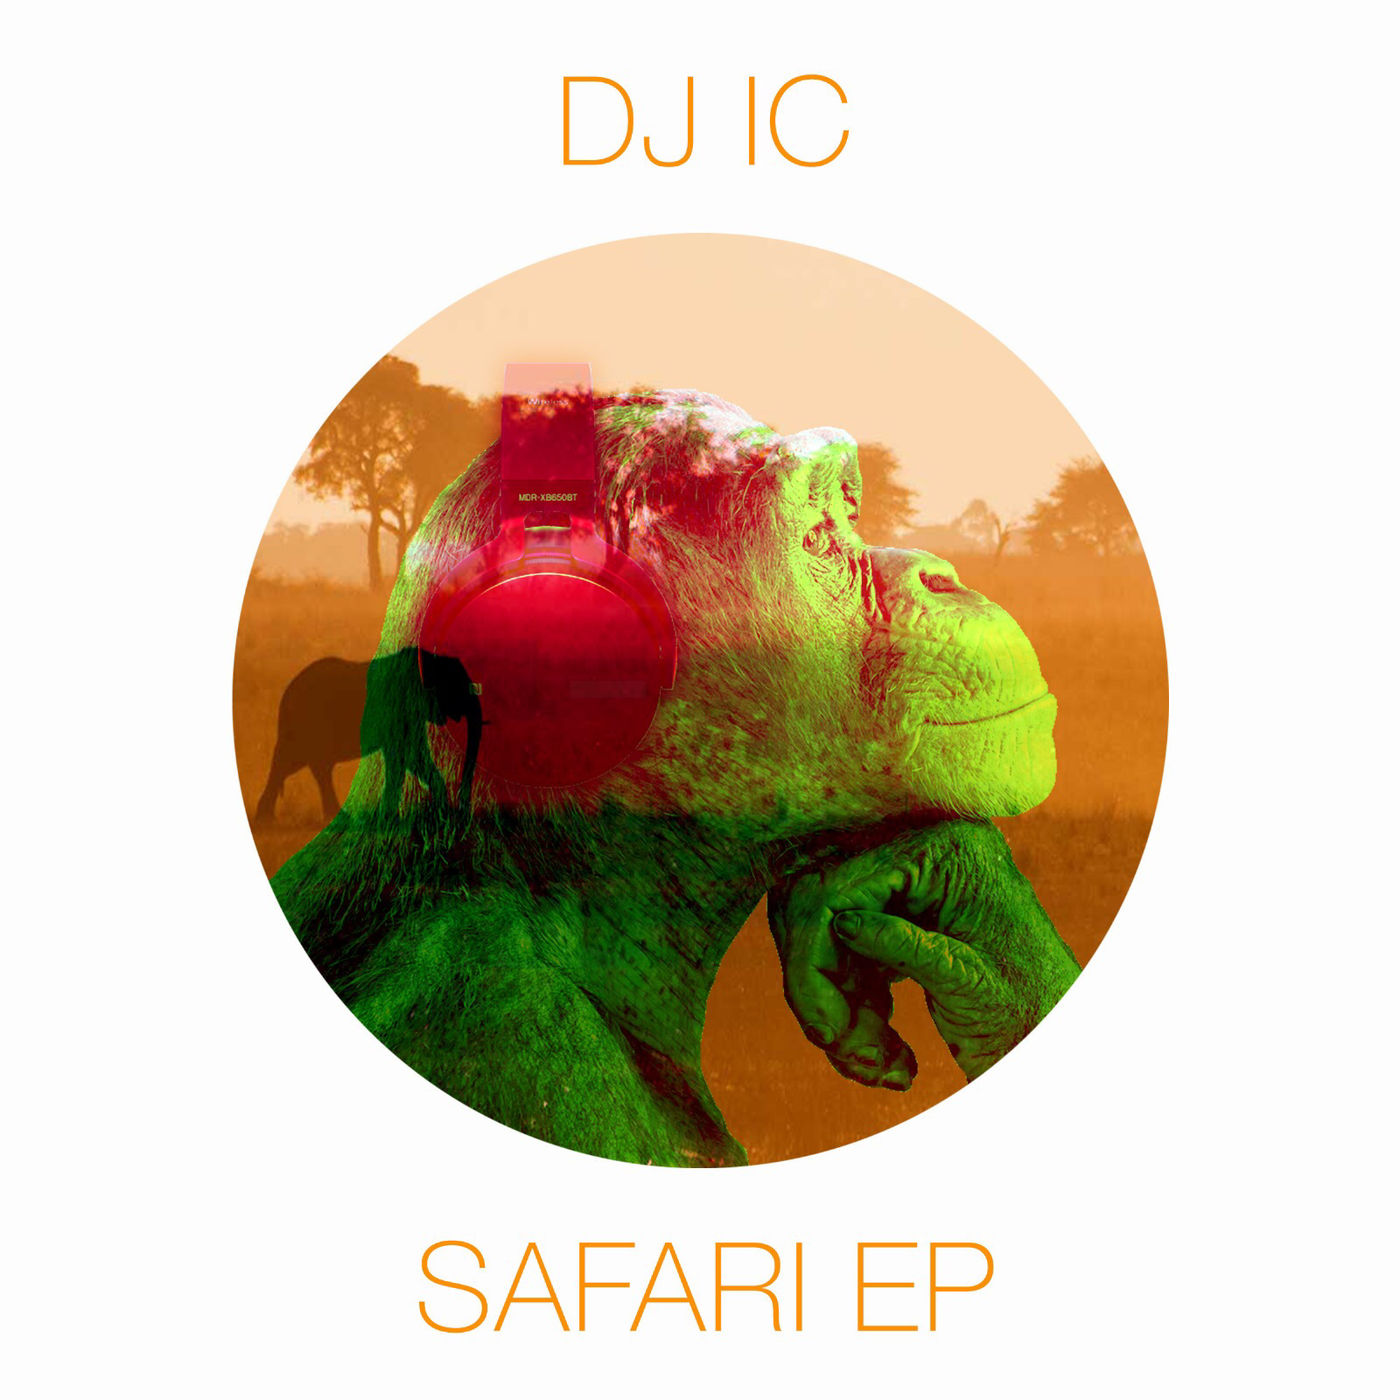 DJ IC - SAFARI EP / DUH Recordings